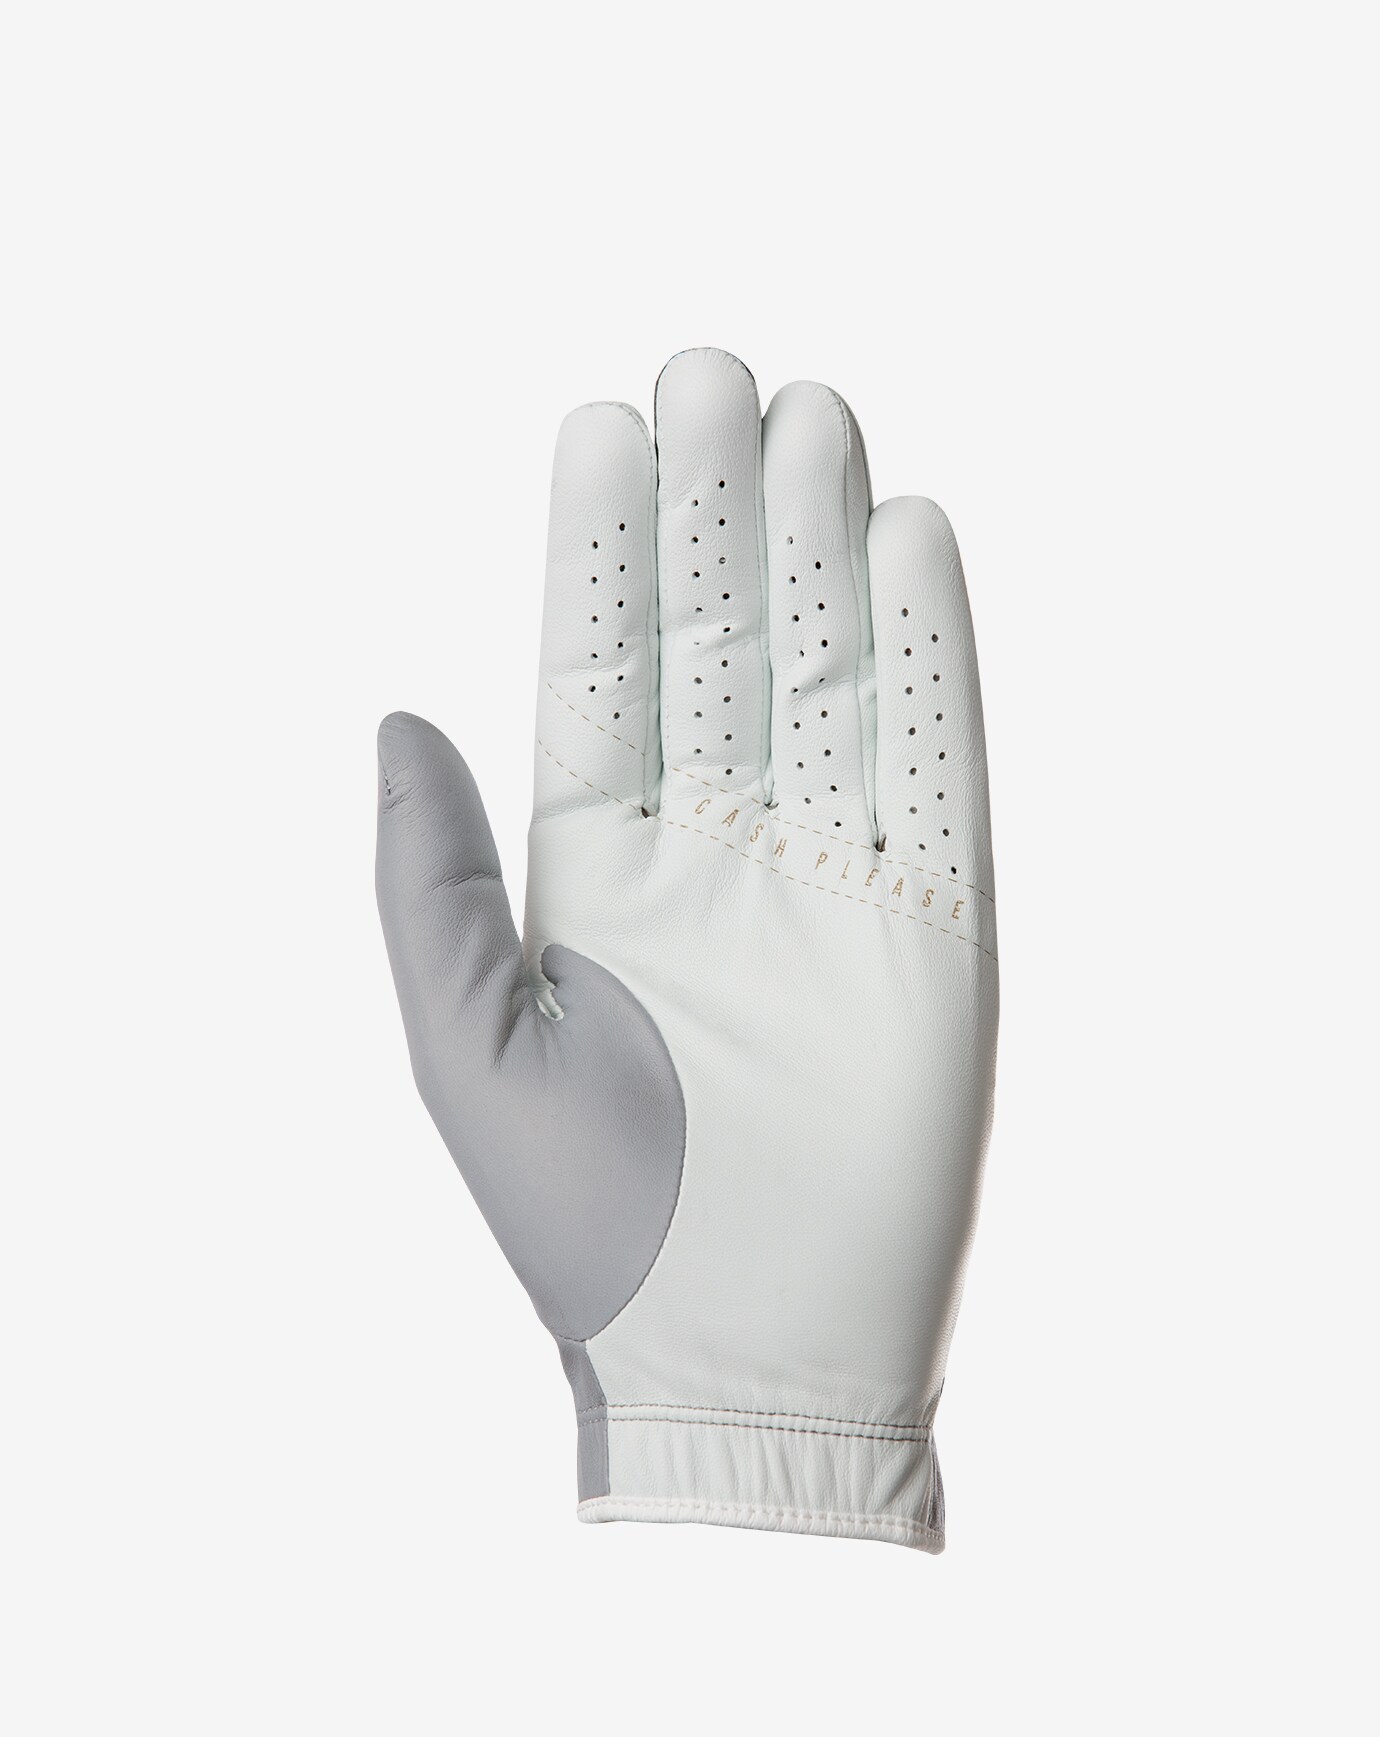 Gray/White Single discount 94% NoName gloves WOMEN FASHION Accessories Gloves 